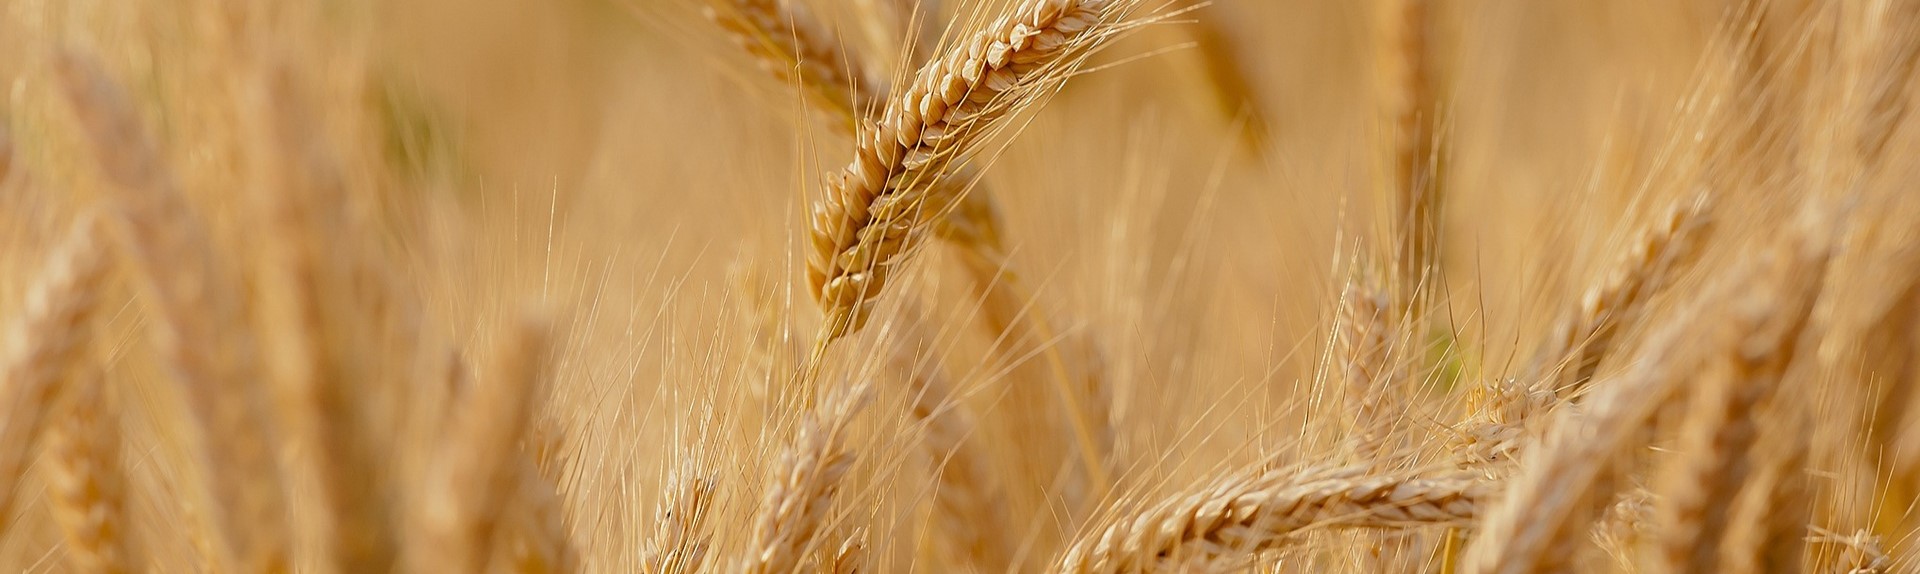 wheat banner